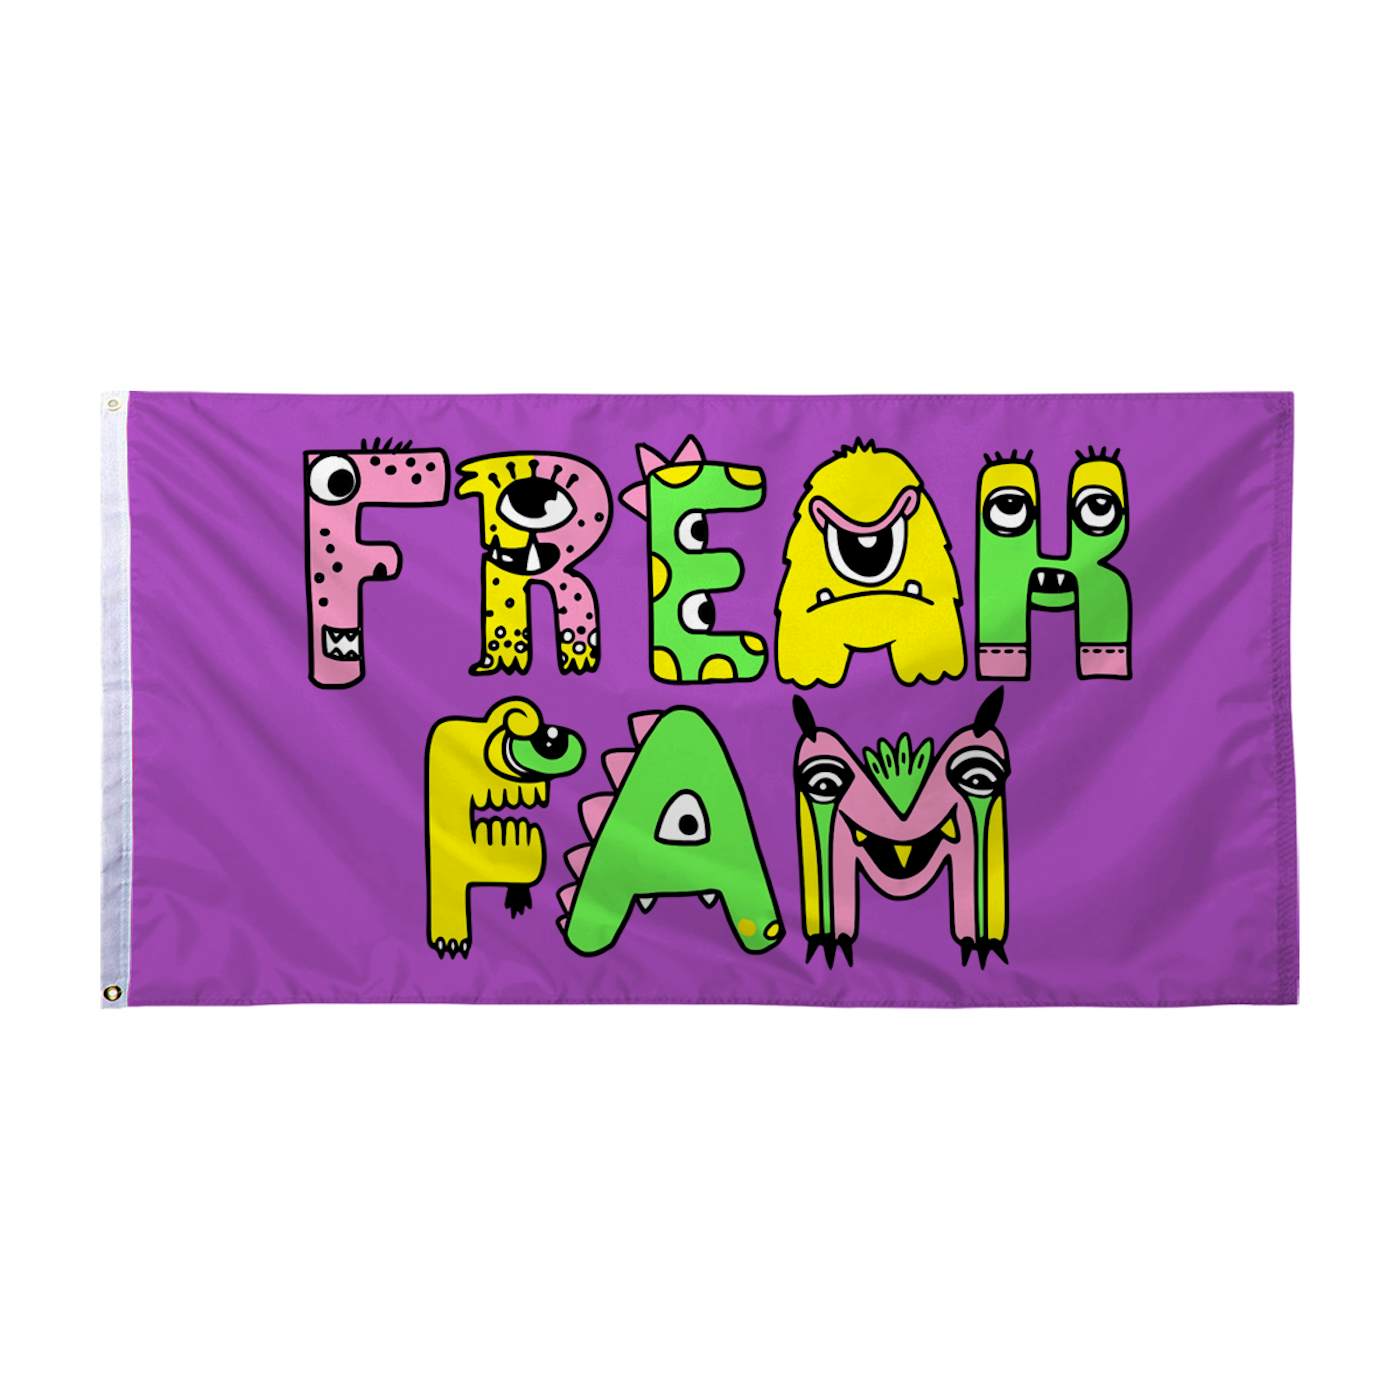 Sofi Tukker Freak Fam Flag - Purple